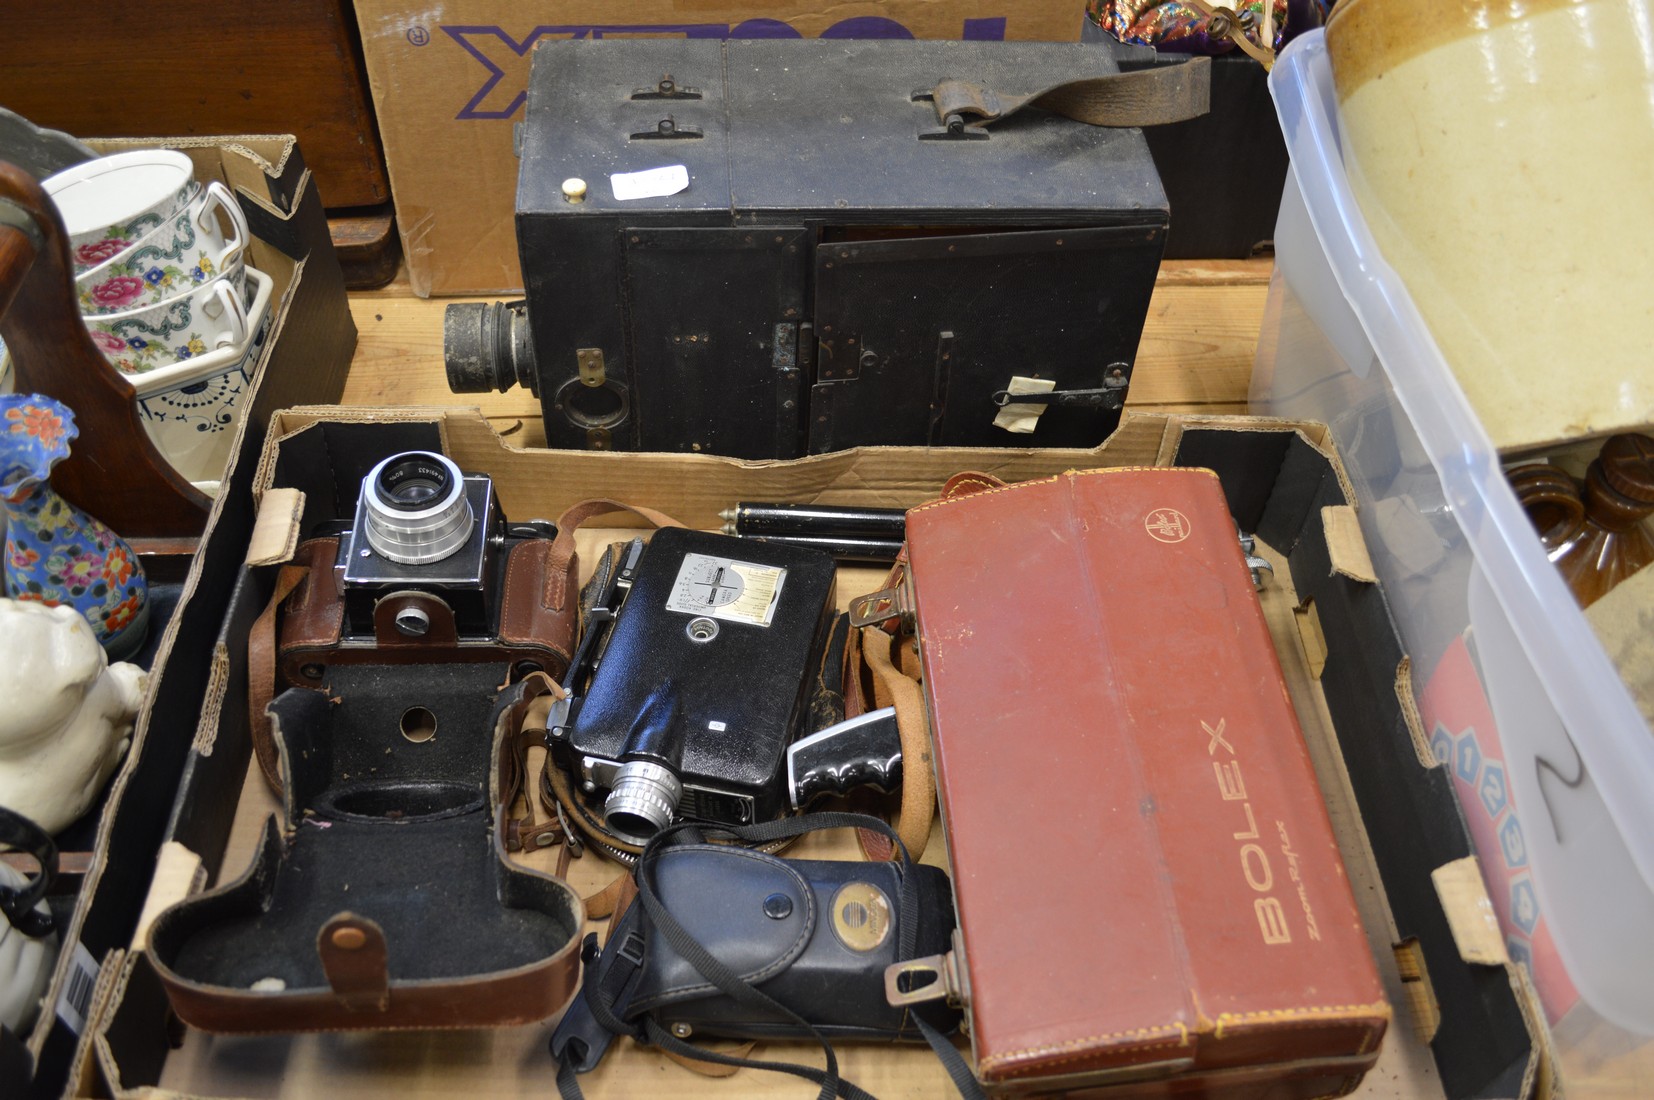 Early camera and camera equipment.